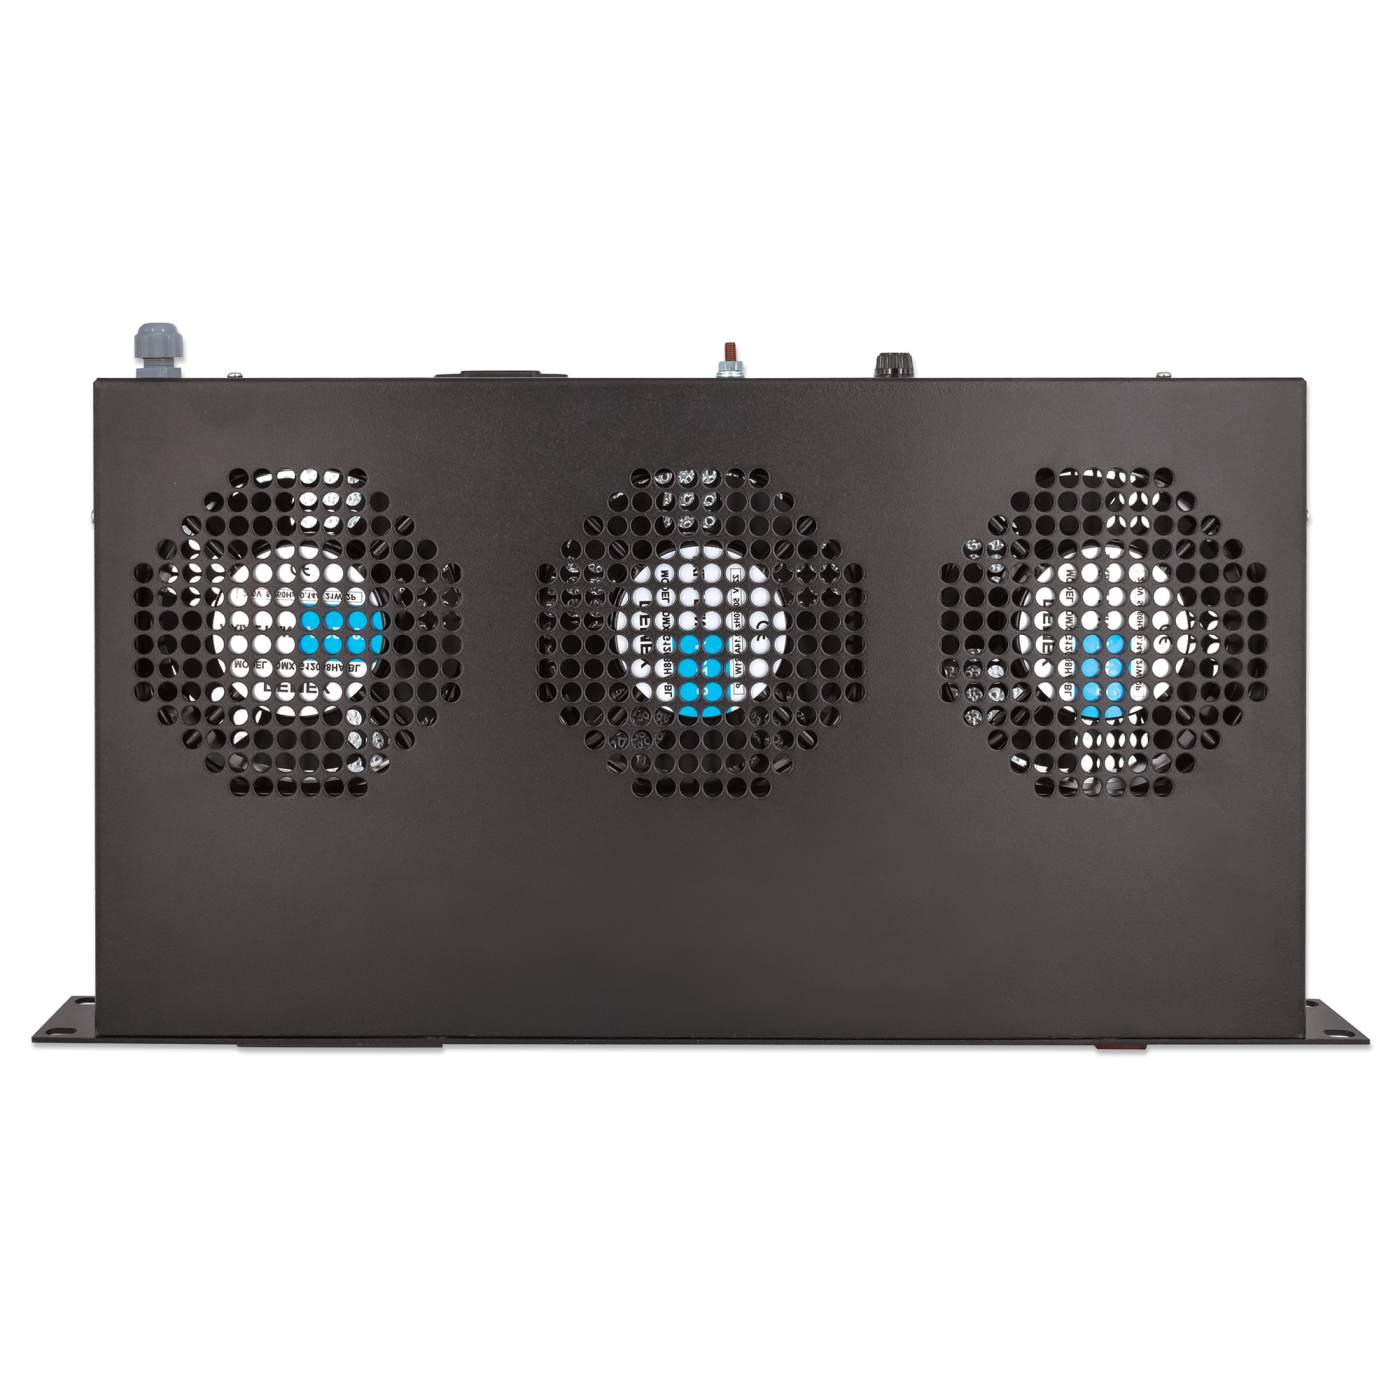 3-Fan Ventilation Unit for 19" Racks Image 6